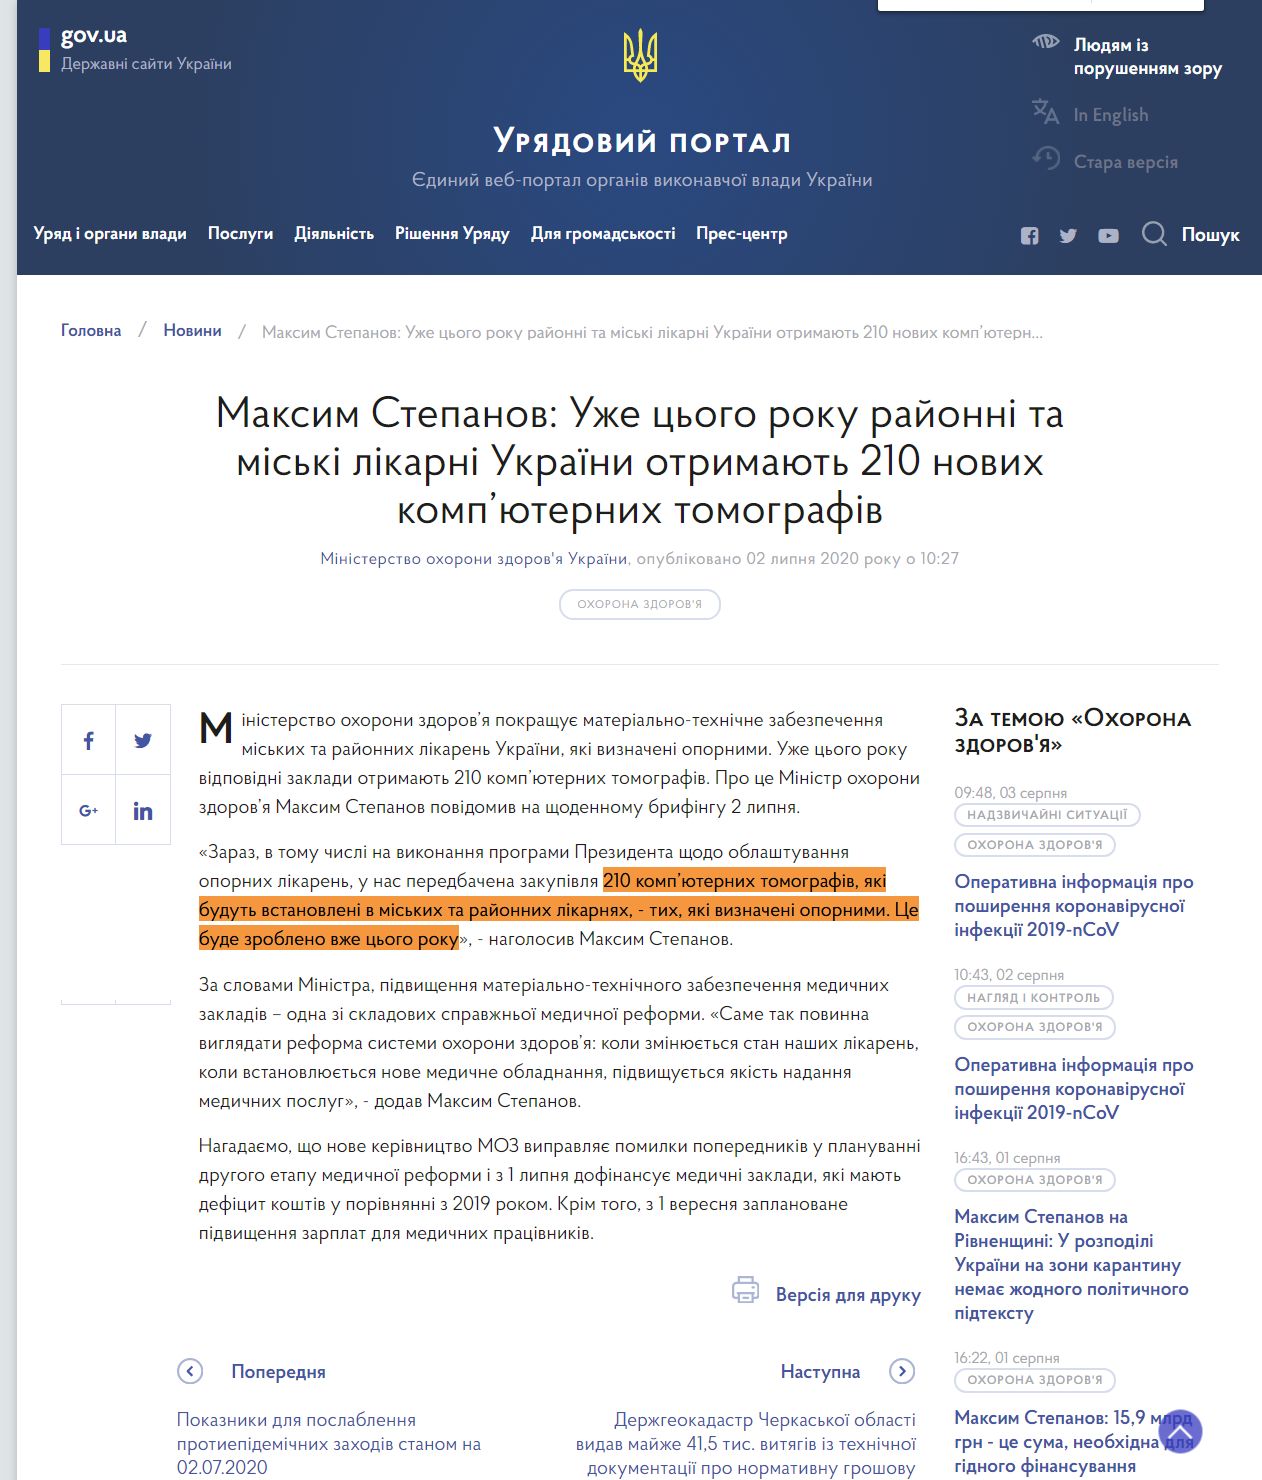 https://www.kmu.gov.ua/news/maksim-stepanov-uzhe-cogo-roku-rajonni-ta-miski-likarni-ukrayini-otrimayut-210-novih-kompyuternih-tomografiv